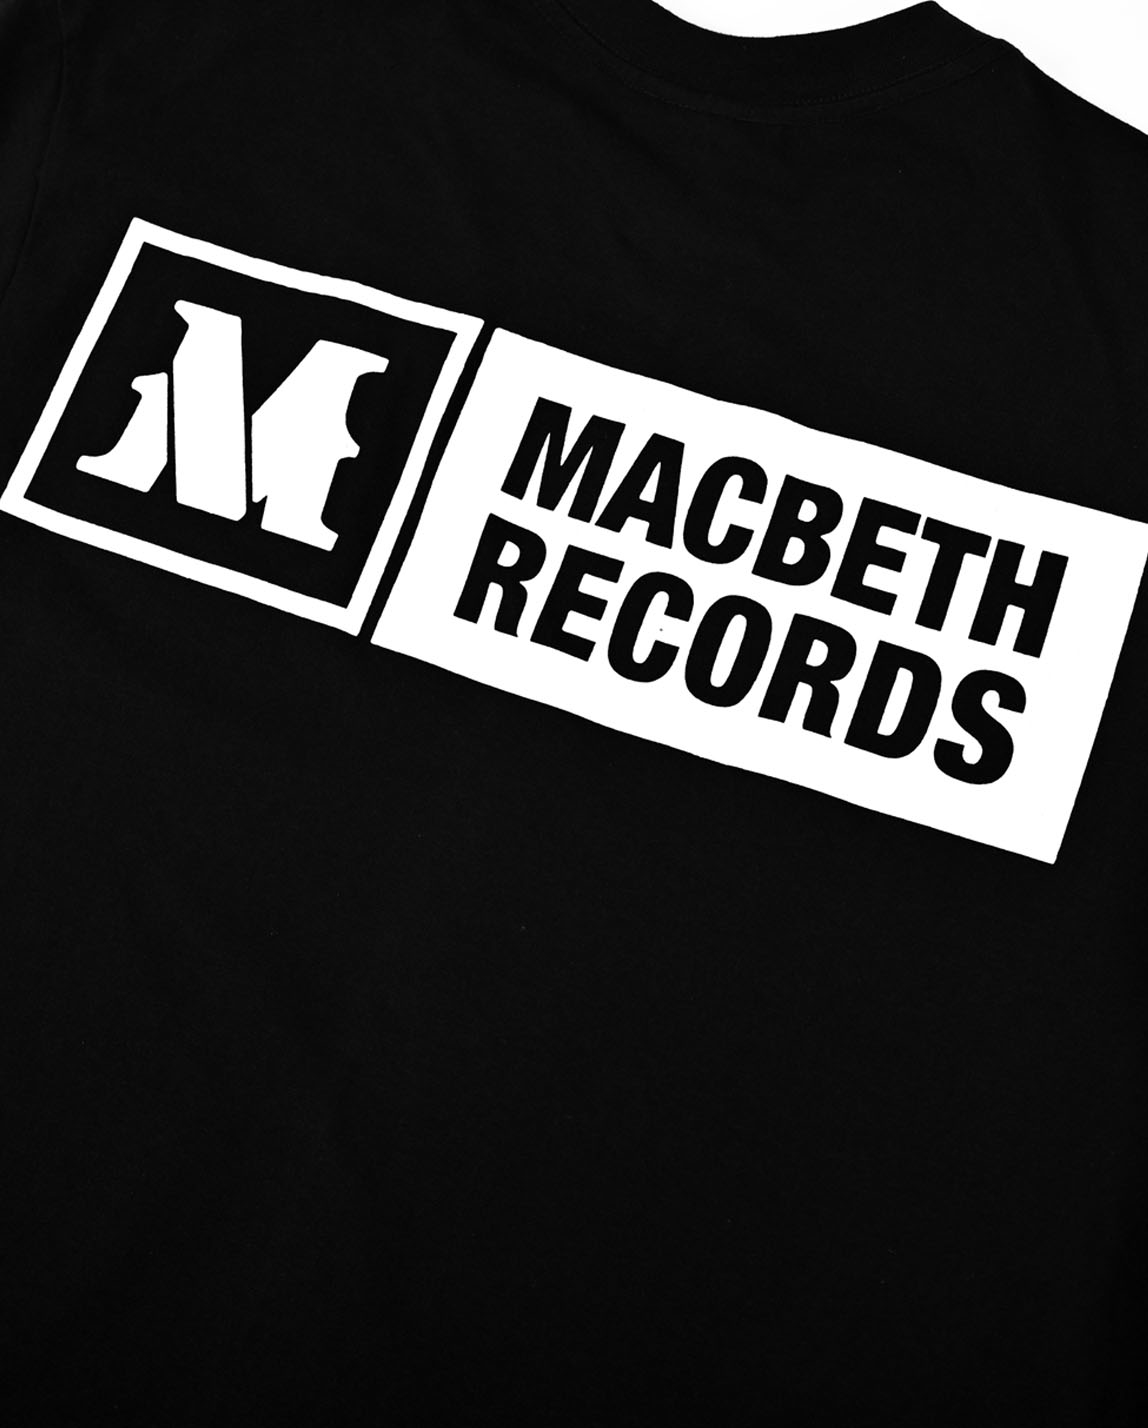 Picture of MACBETH RECORDS